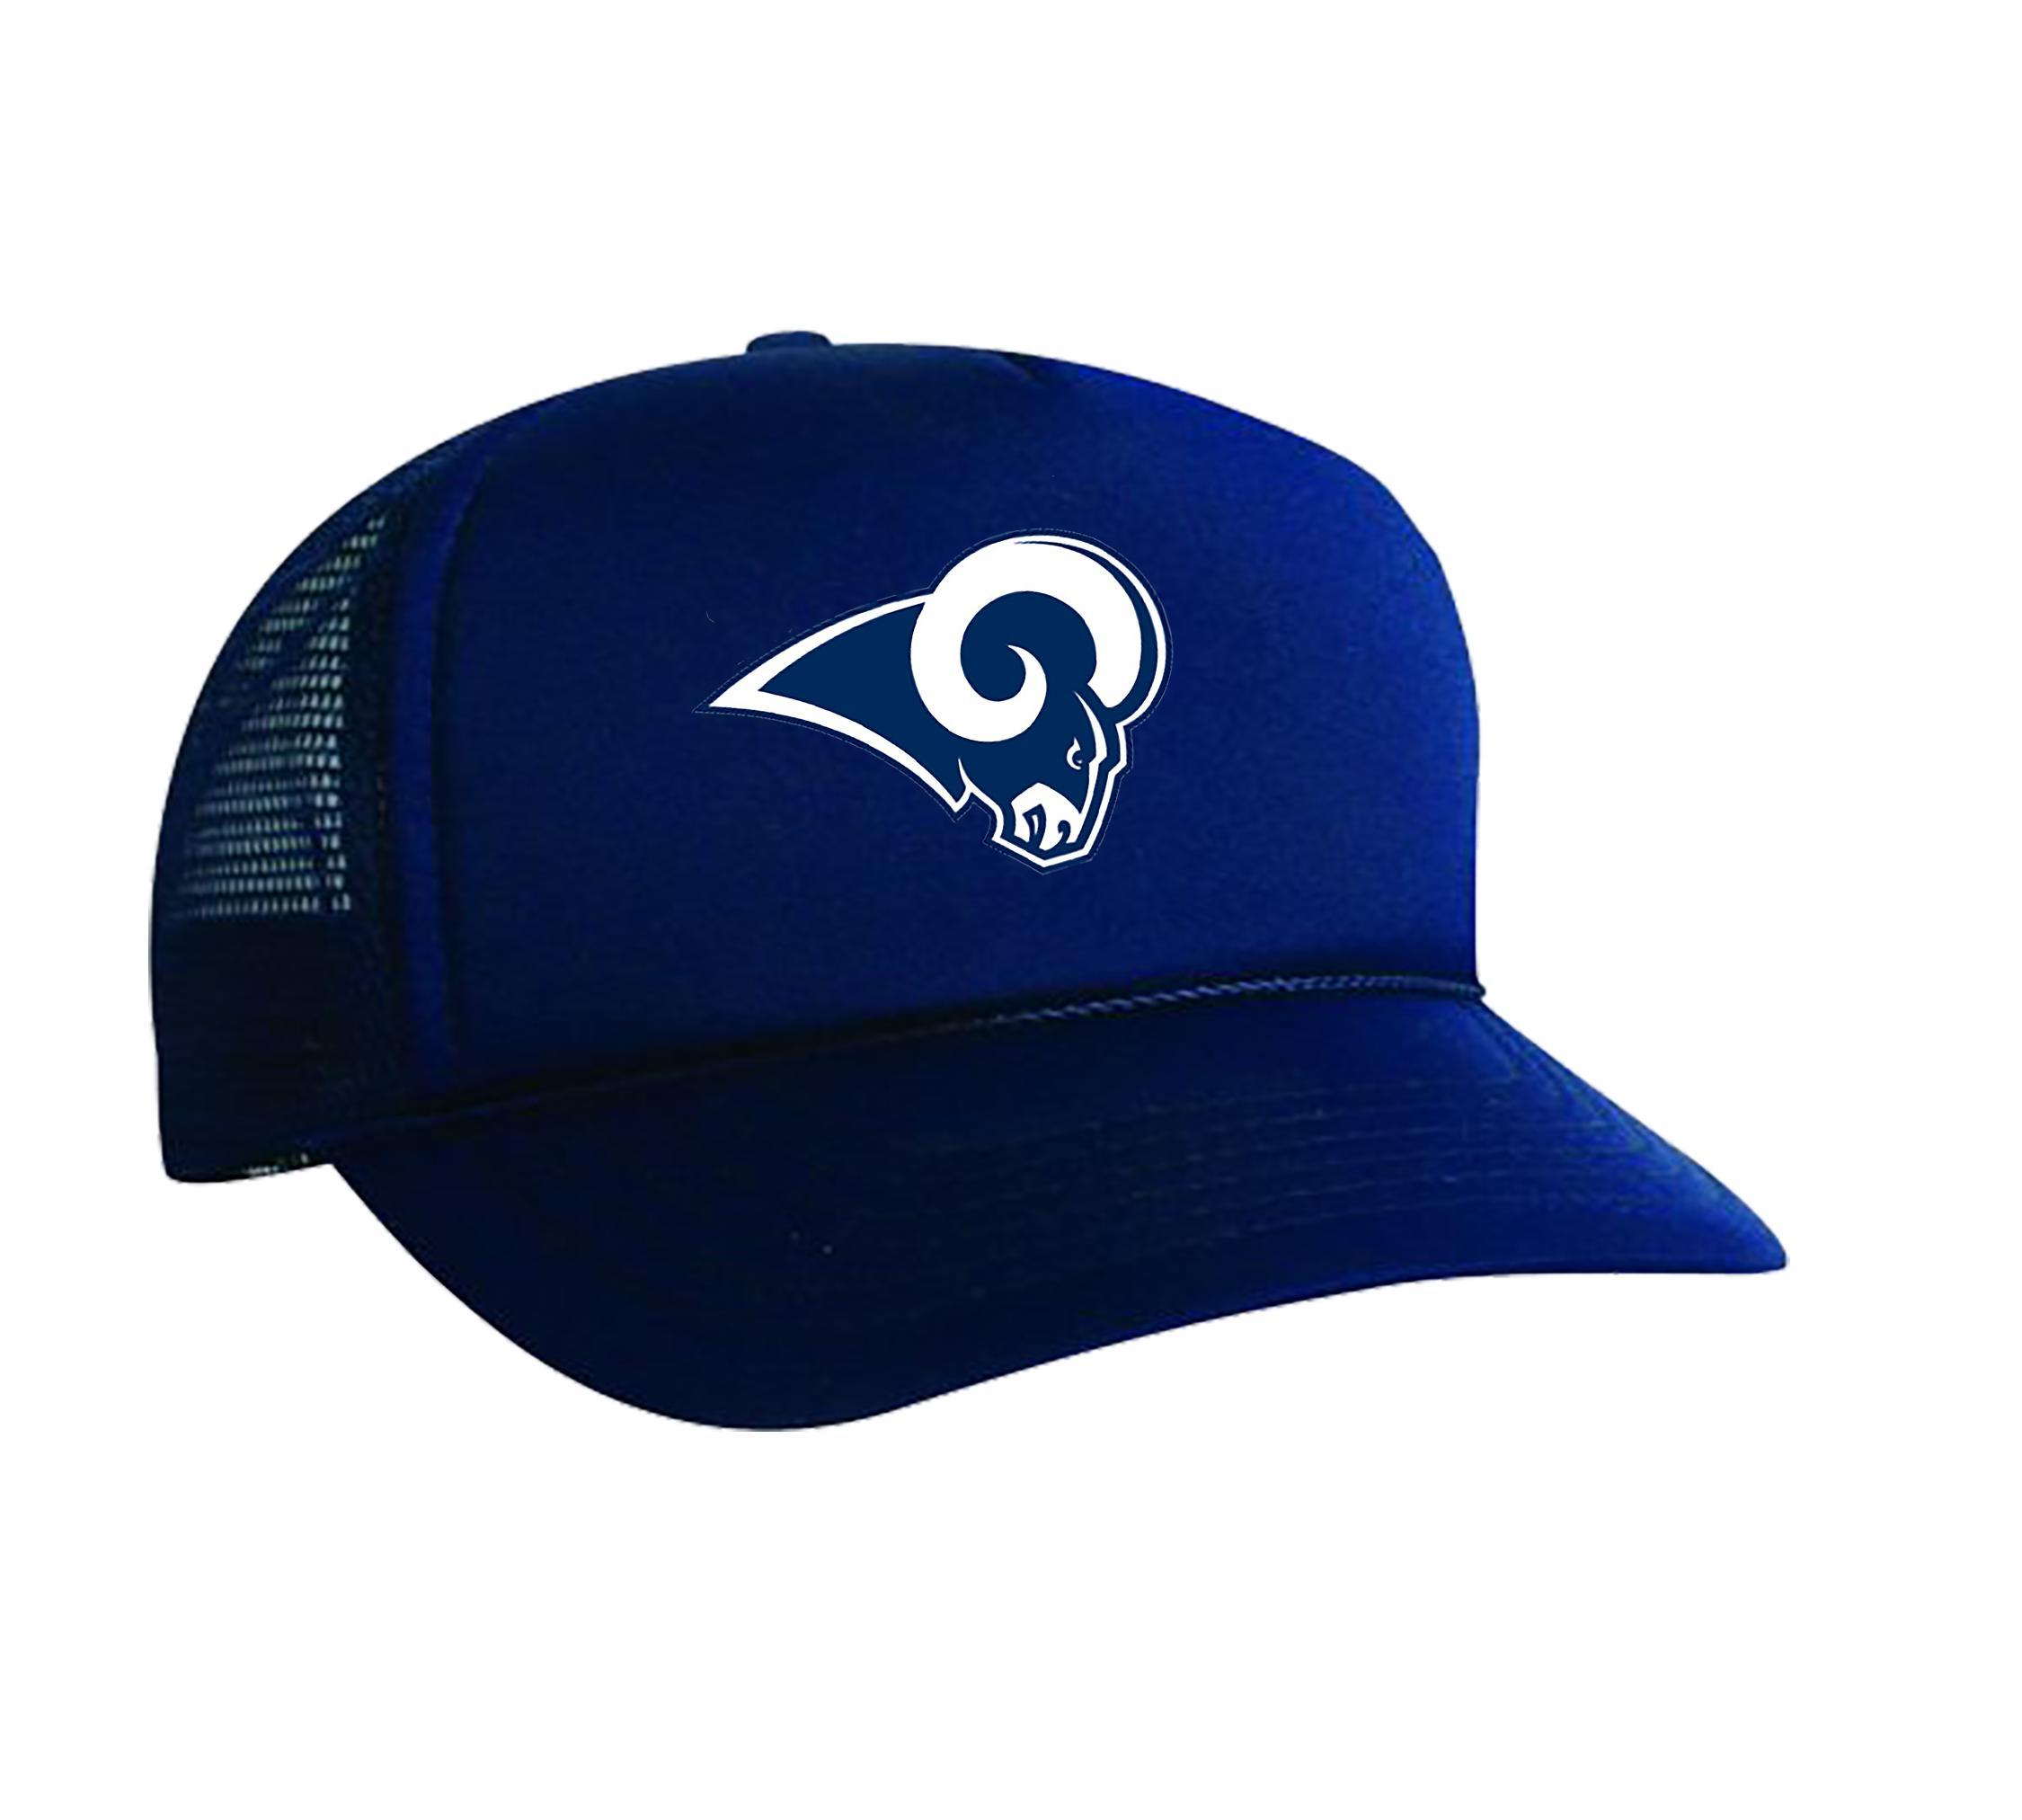 NFL Rams Logo - NFL RAMS LOGO NAVY PRINTED HAT